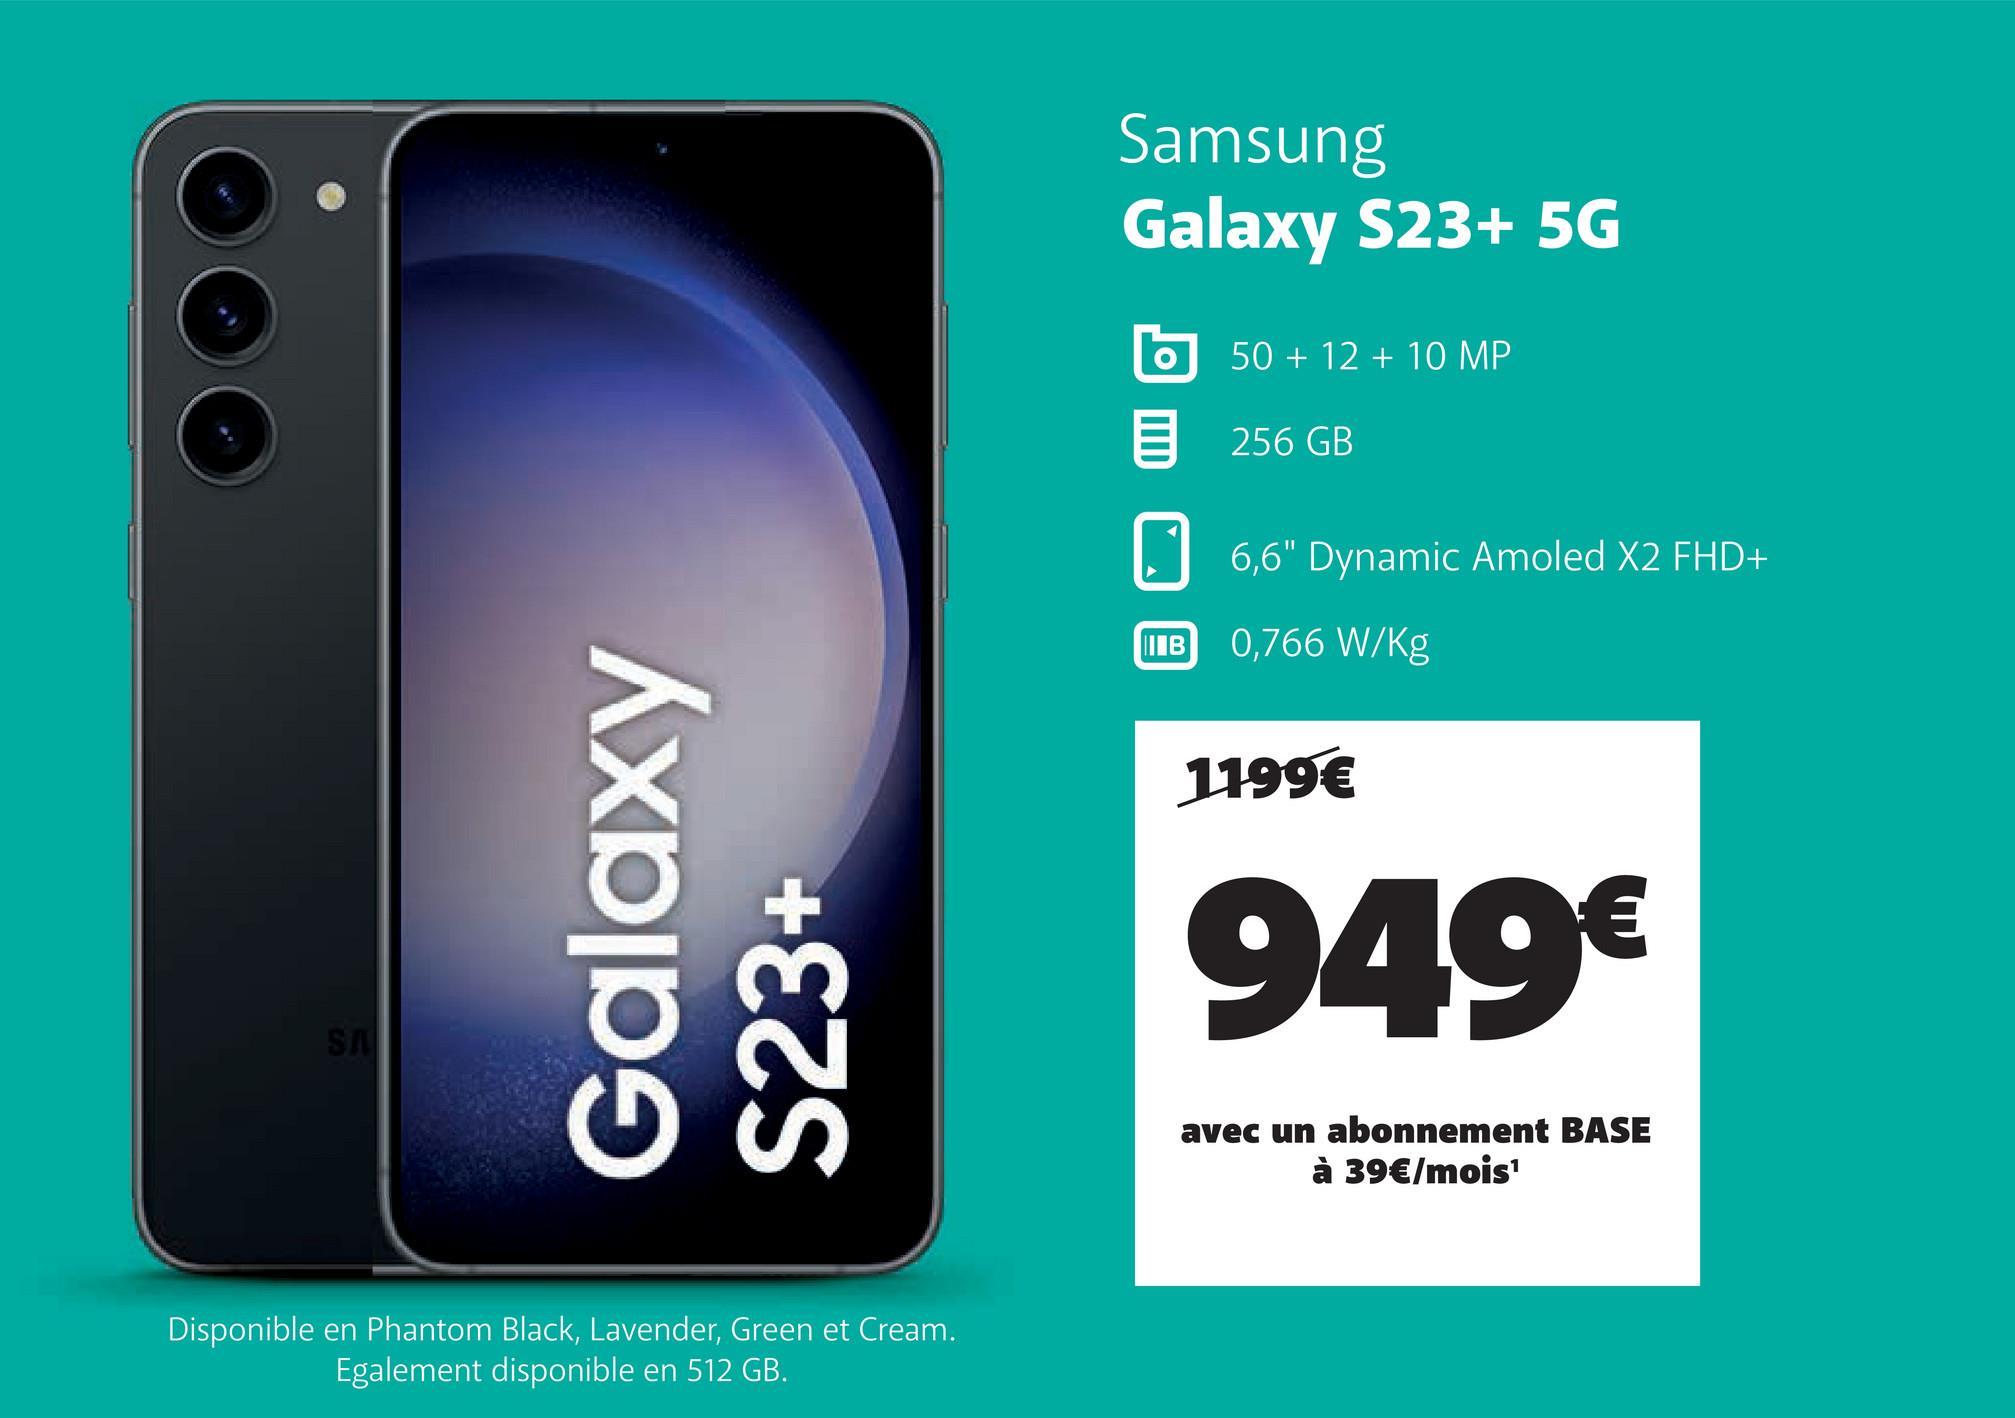 SA
Galaxy
S23+
Disponible en Phantom Black, Lavender, Green et Cream.
Egalement disponible en 512 GB.
Samsung
Galaxy S23+ 5G
O
IB
50 + 12 + 10 MP
256 GB
6,6" Dynamic Amoled X2 FHD+
0,766 W/kg
1199€
949€
avec un abonnement BASE
à 39€/mois¹